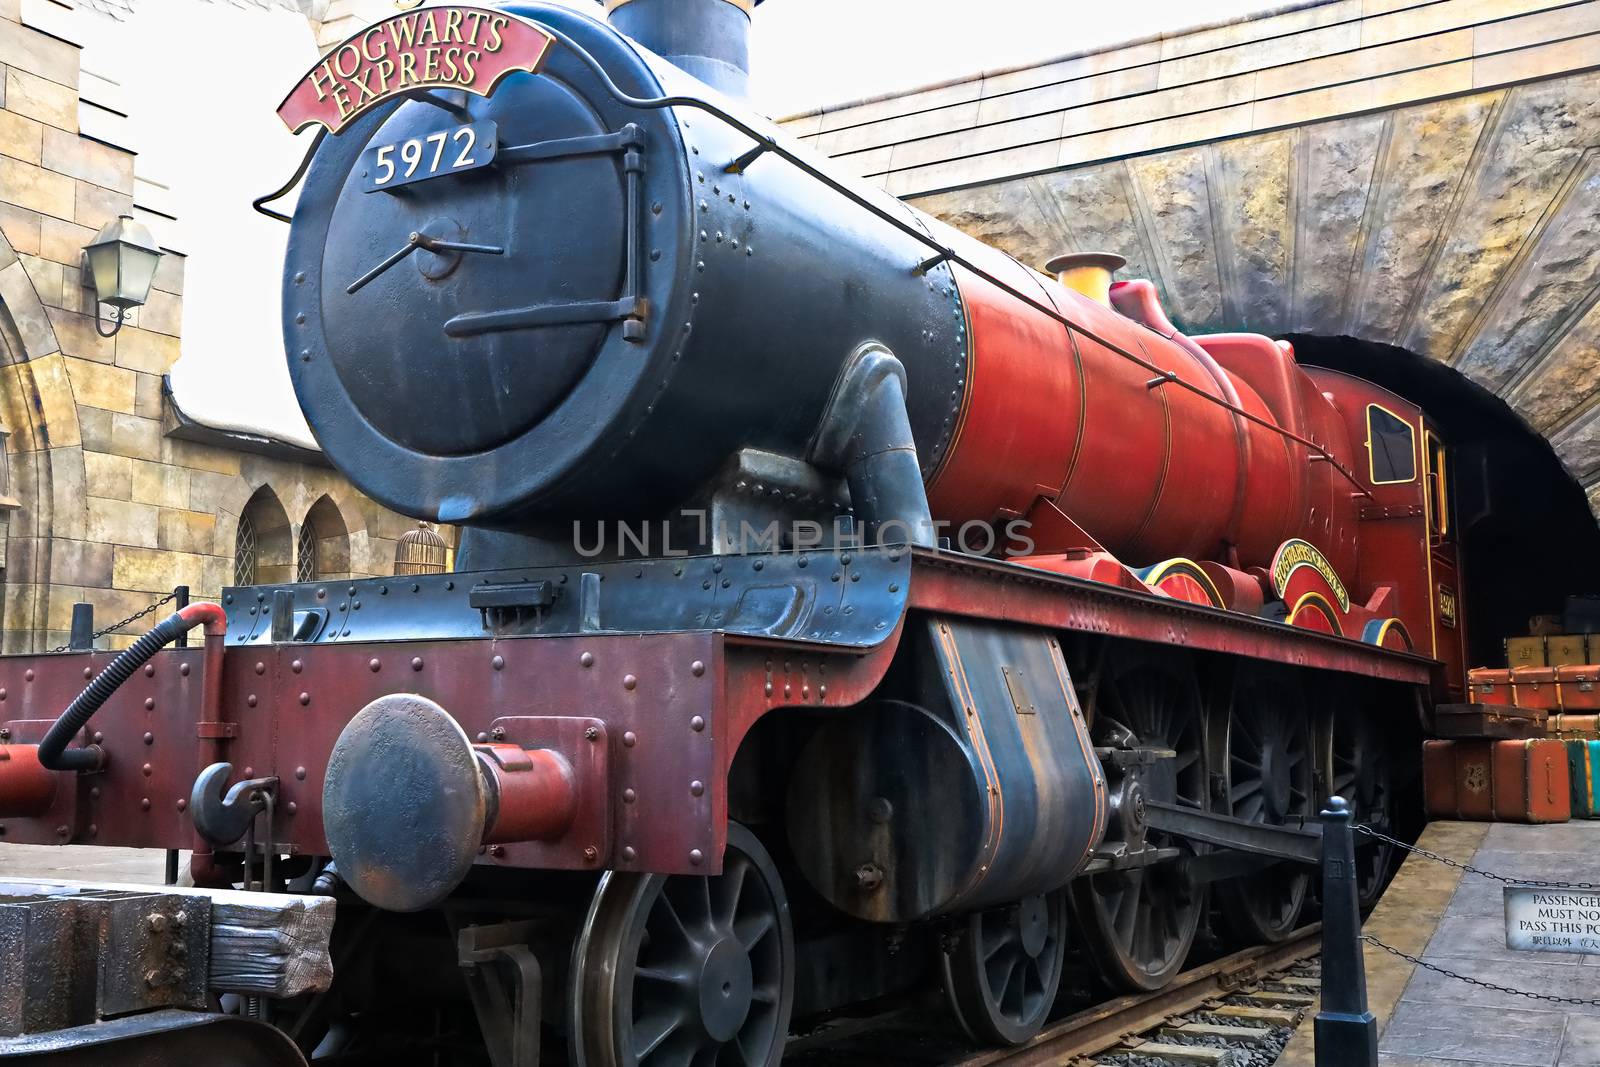 OSAKA , JAPAN - Jan 19,2019 : The Hogwarts express train at the Wizarding World of Harry Potter in Universal Studios Japan. by USA-TARO